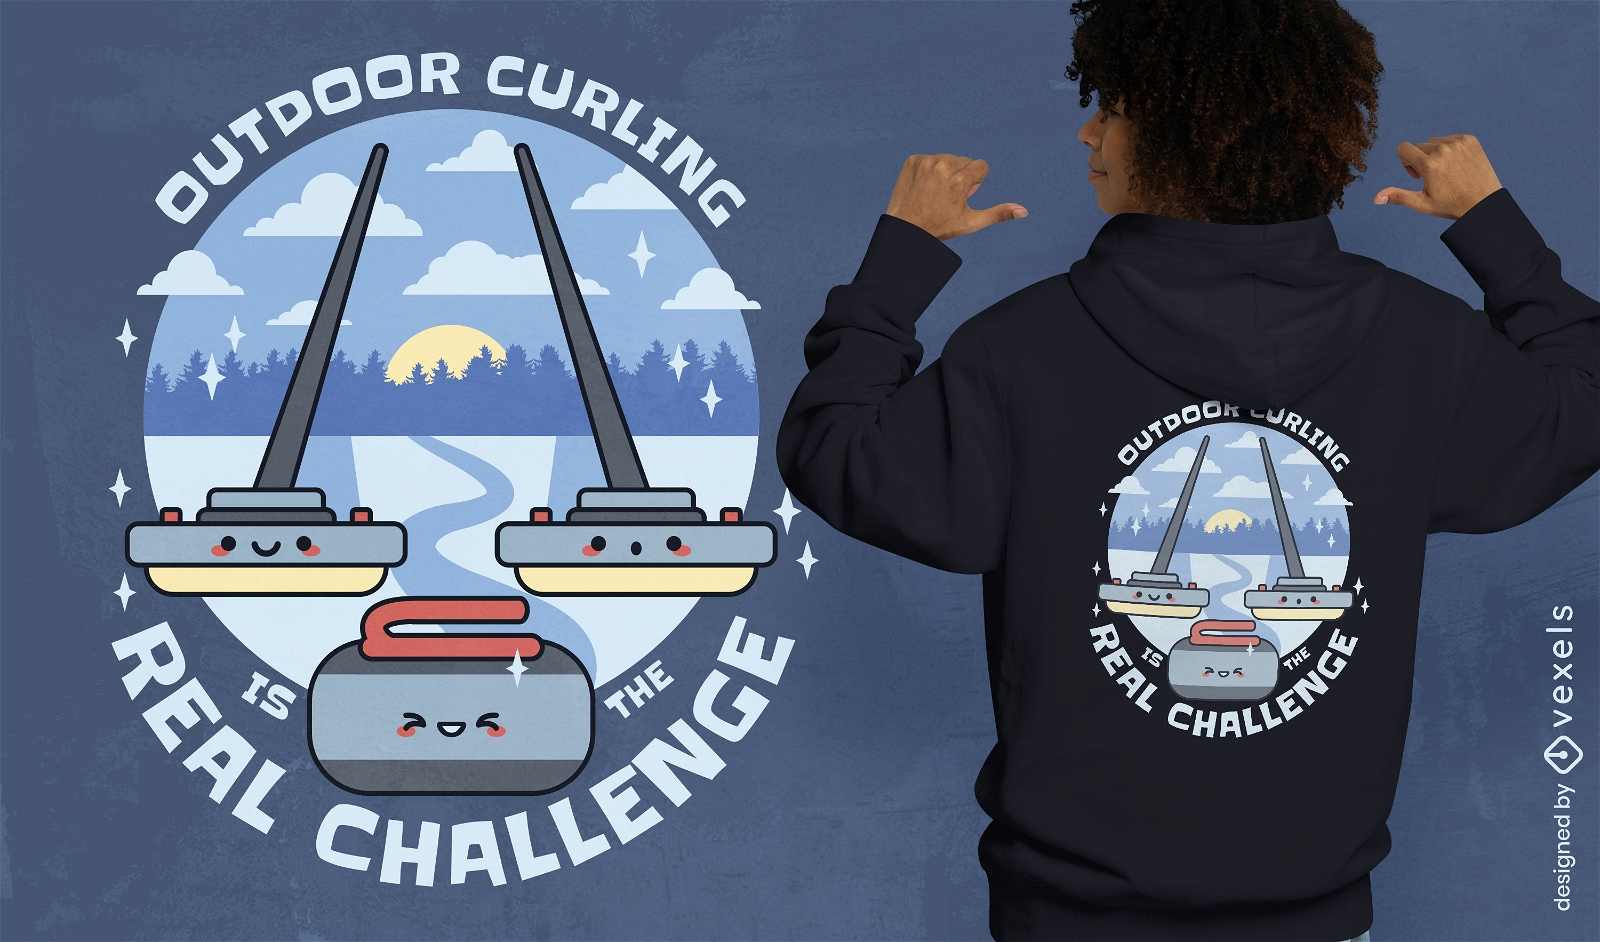 Curling sport quote t-shirt design